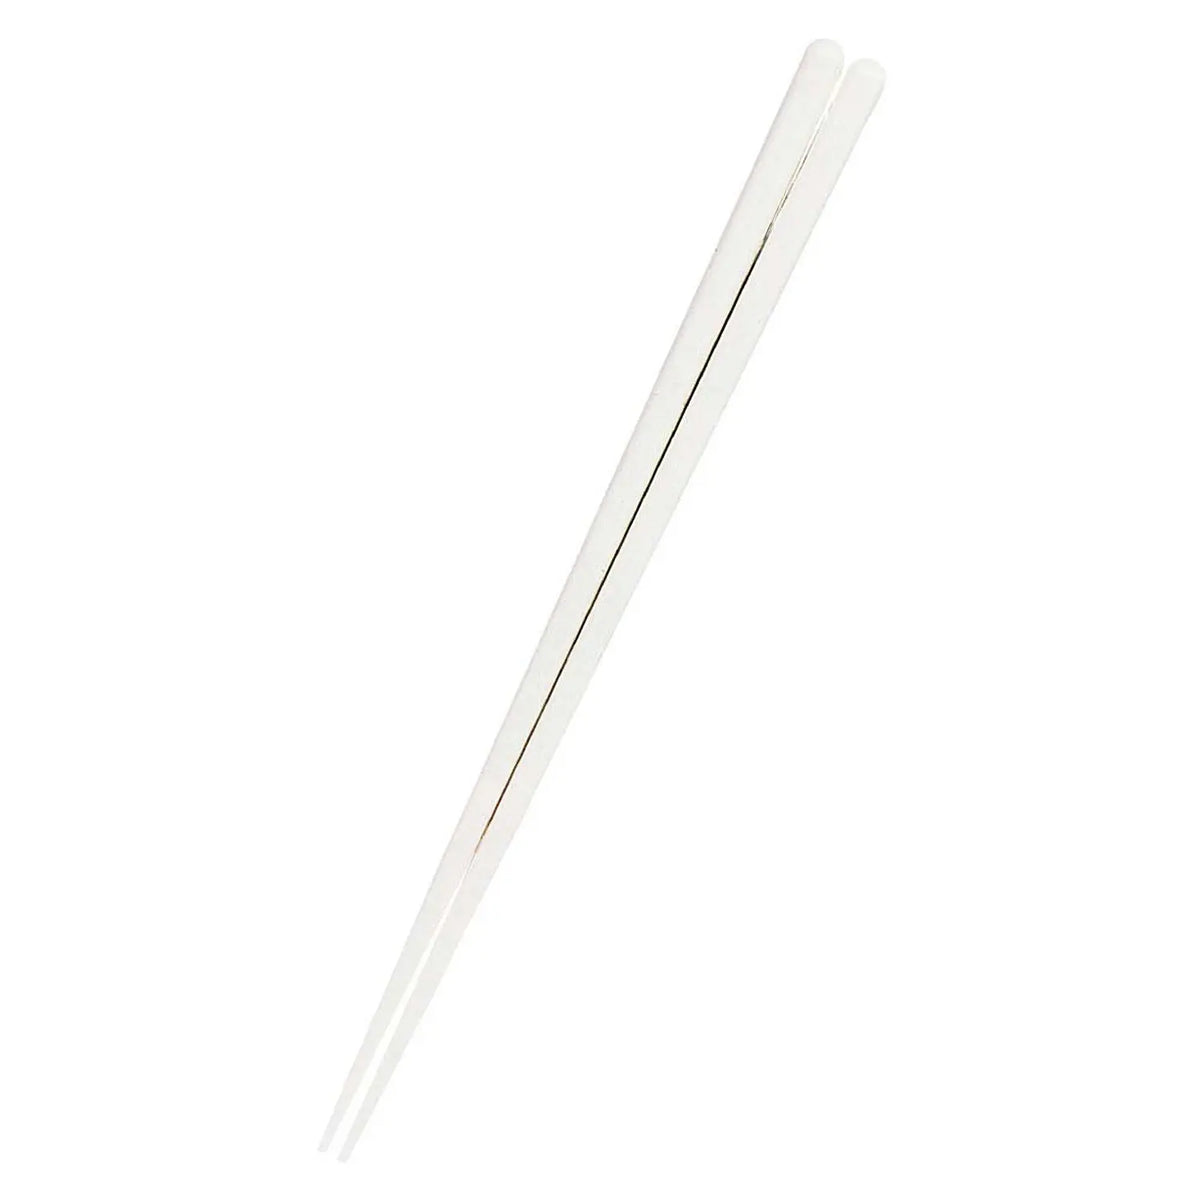 KOMORI SPS Resin Heat Resistant Chopsticks